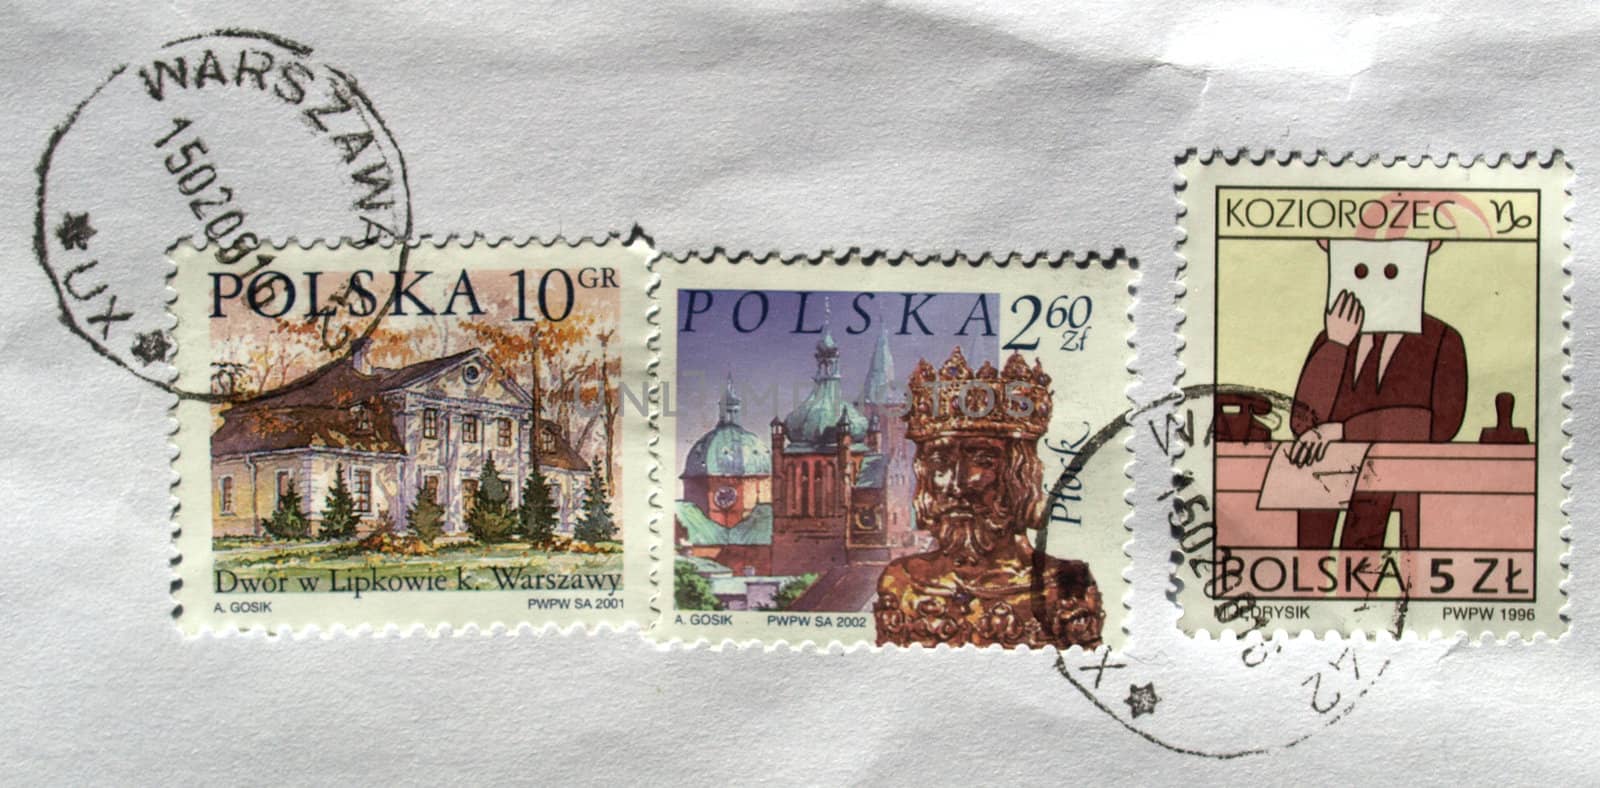 Range of Poland postage stamps